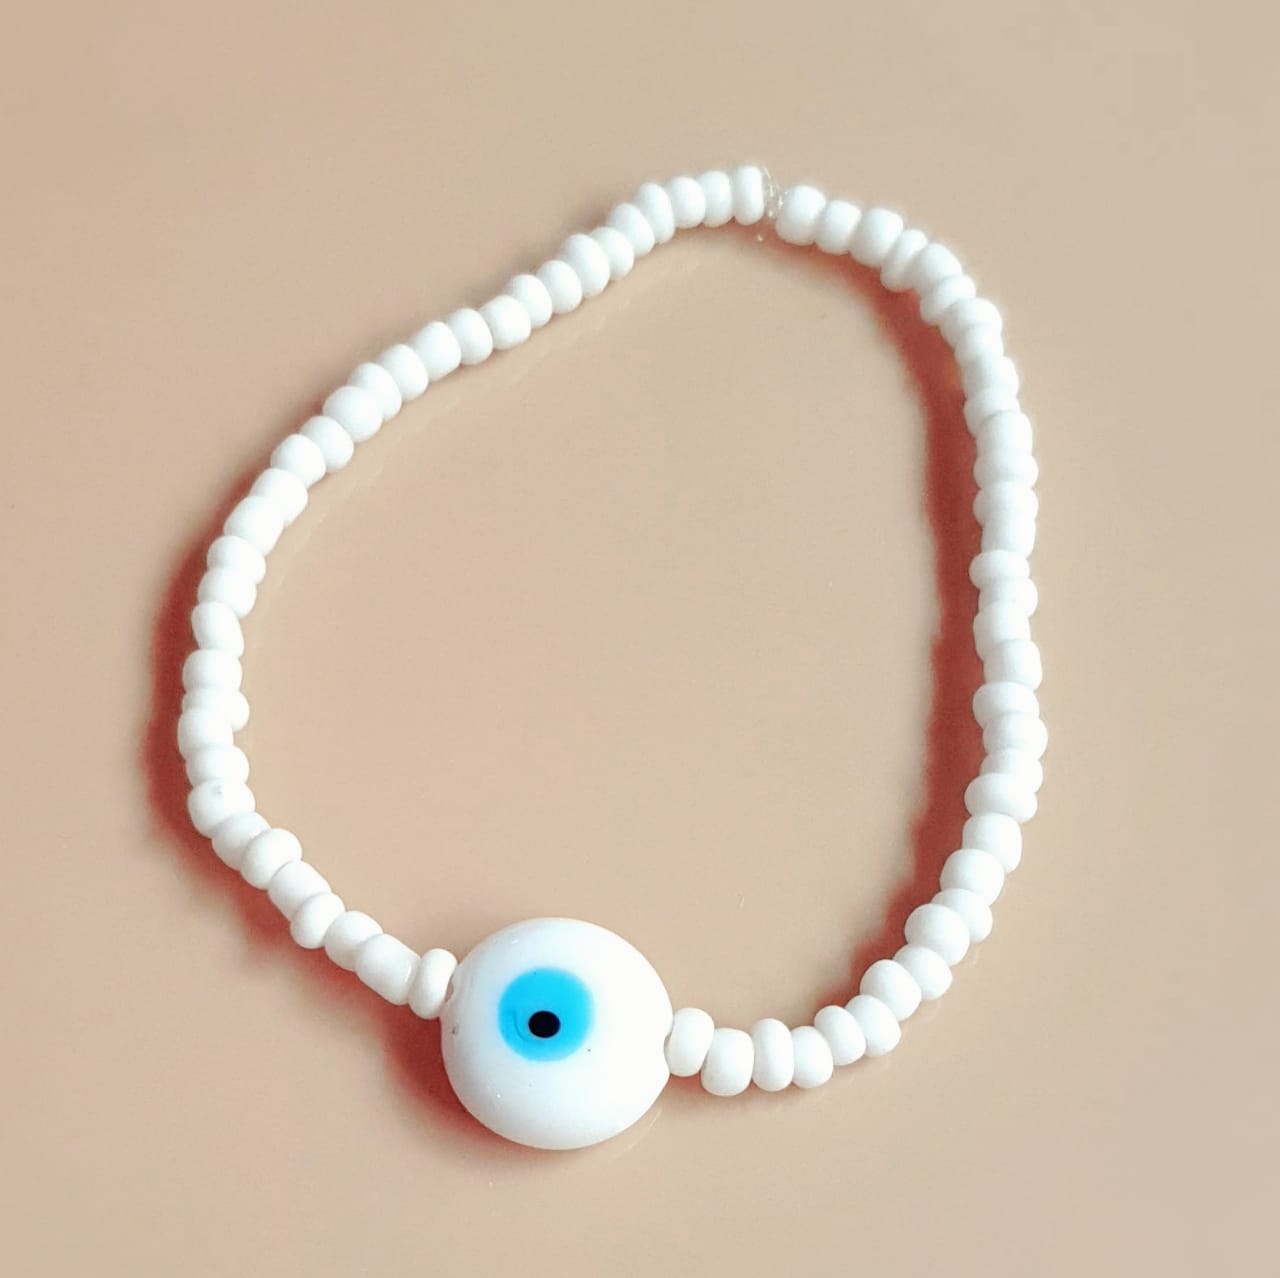 ATM Evil Eye Bracelet, Flat White Evil Eye with White Beads for Good Luck and Prosperity, Nazariya, Nazar Battu , Flexi Cord (1 Piece) (White Evil Eye - Purity, Focus and Wealth)